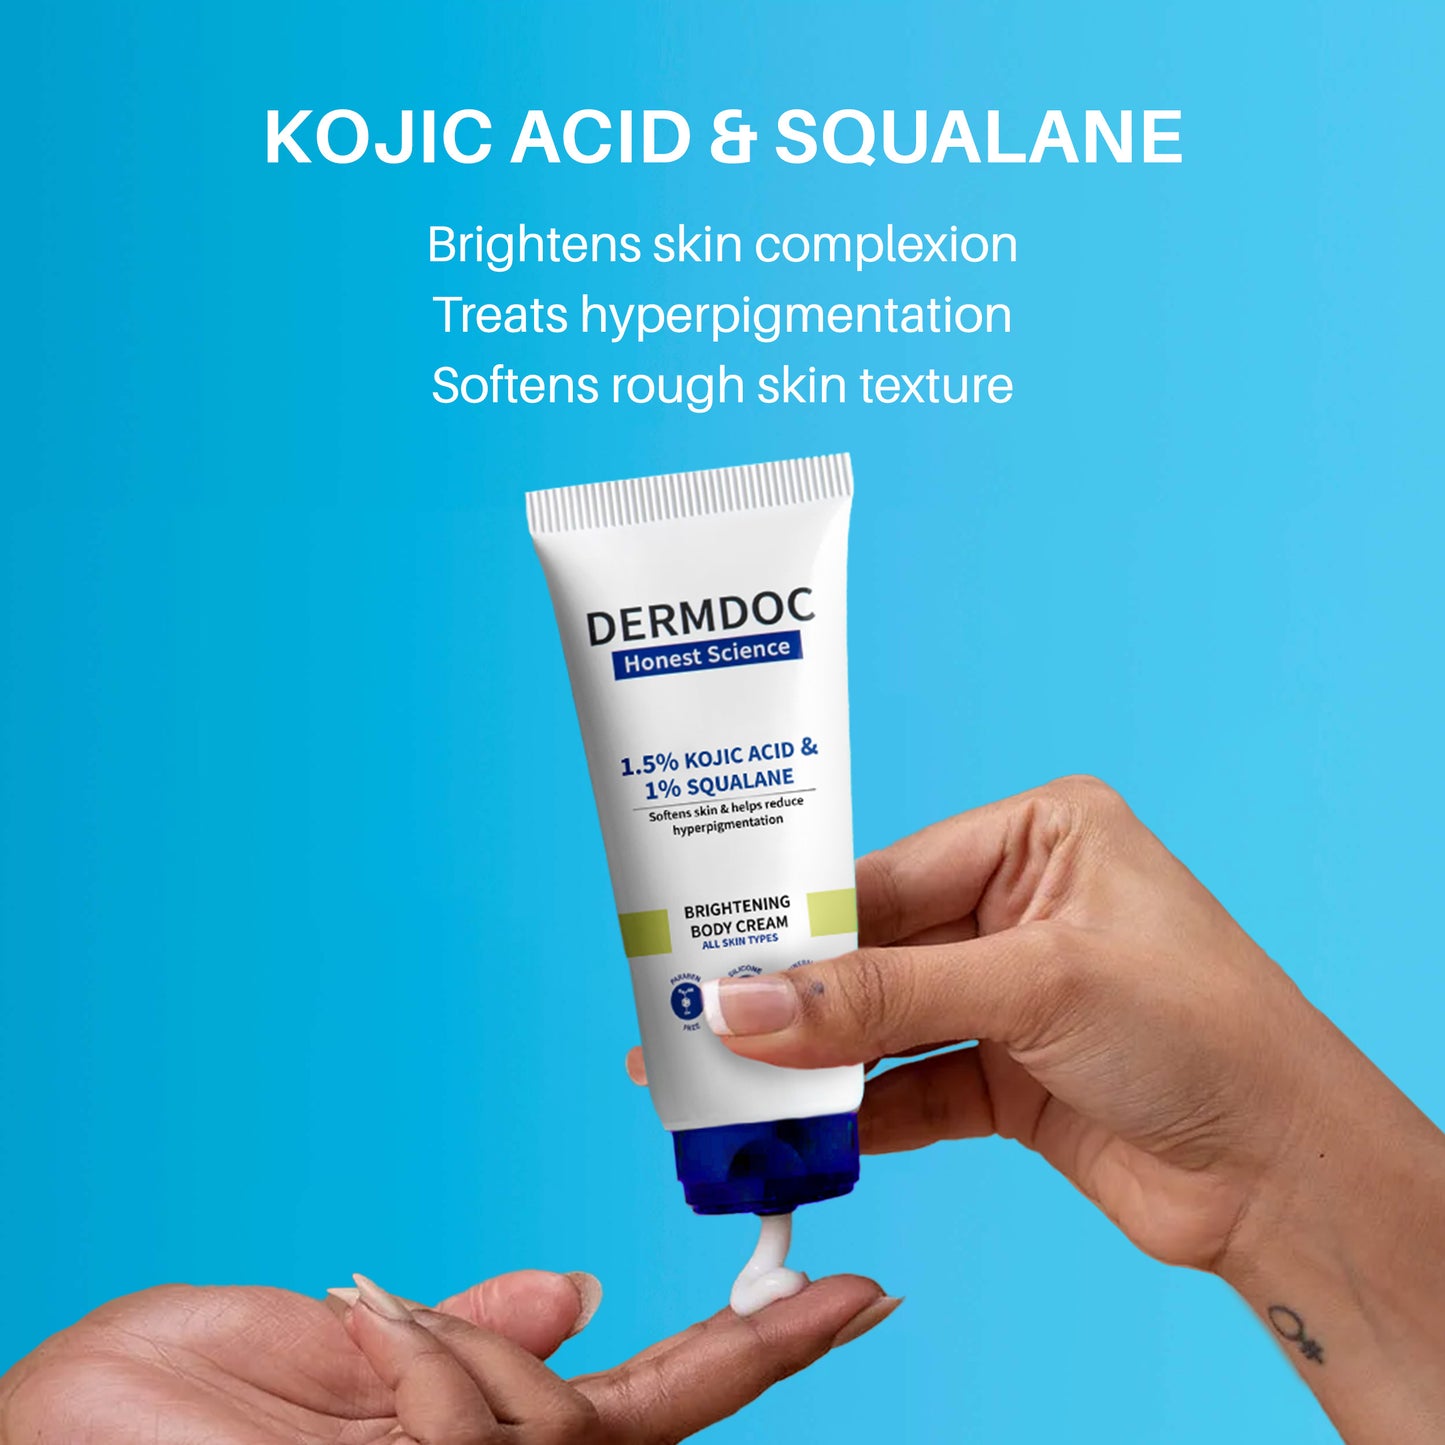 DERMDOC 1.5% Kojic Acid & 1% Squalane Brightening Body Cream (50 gm)